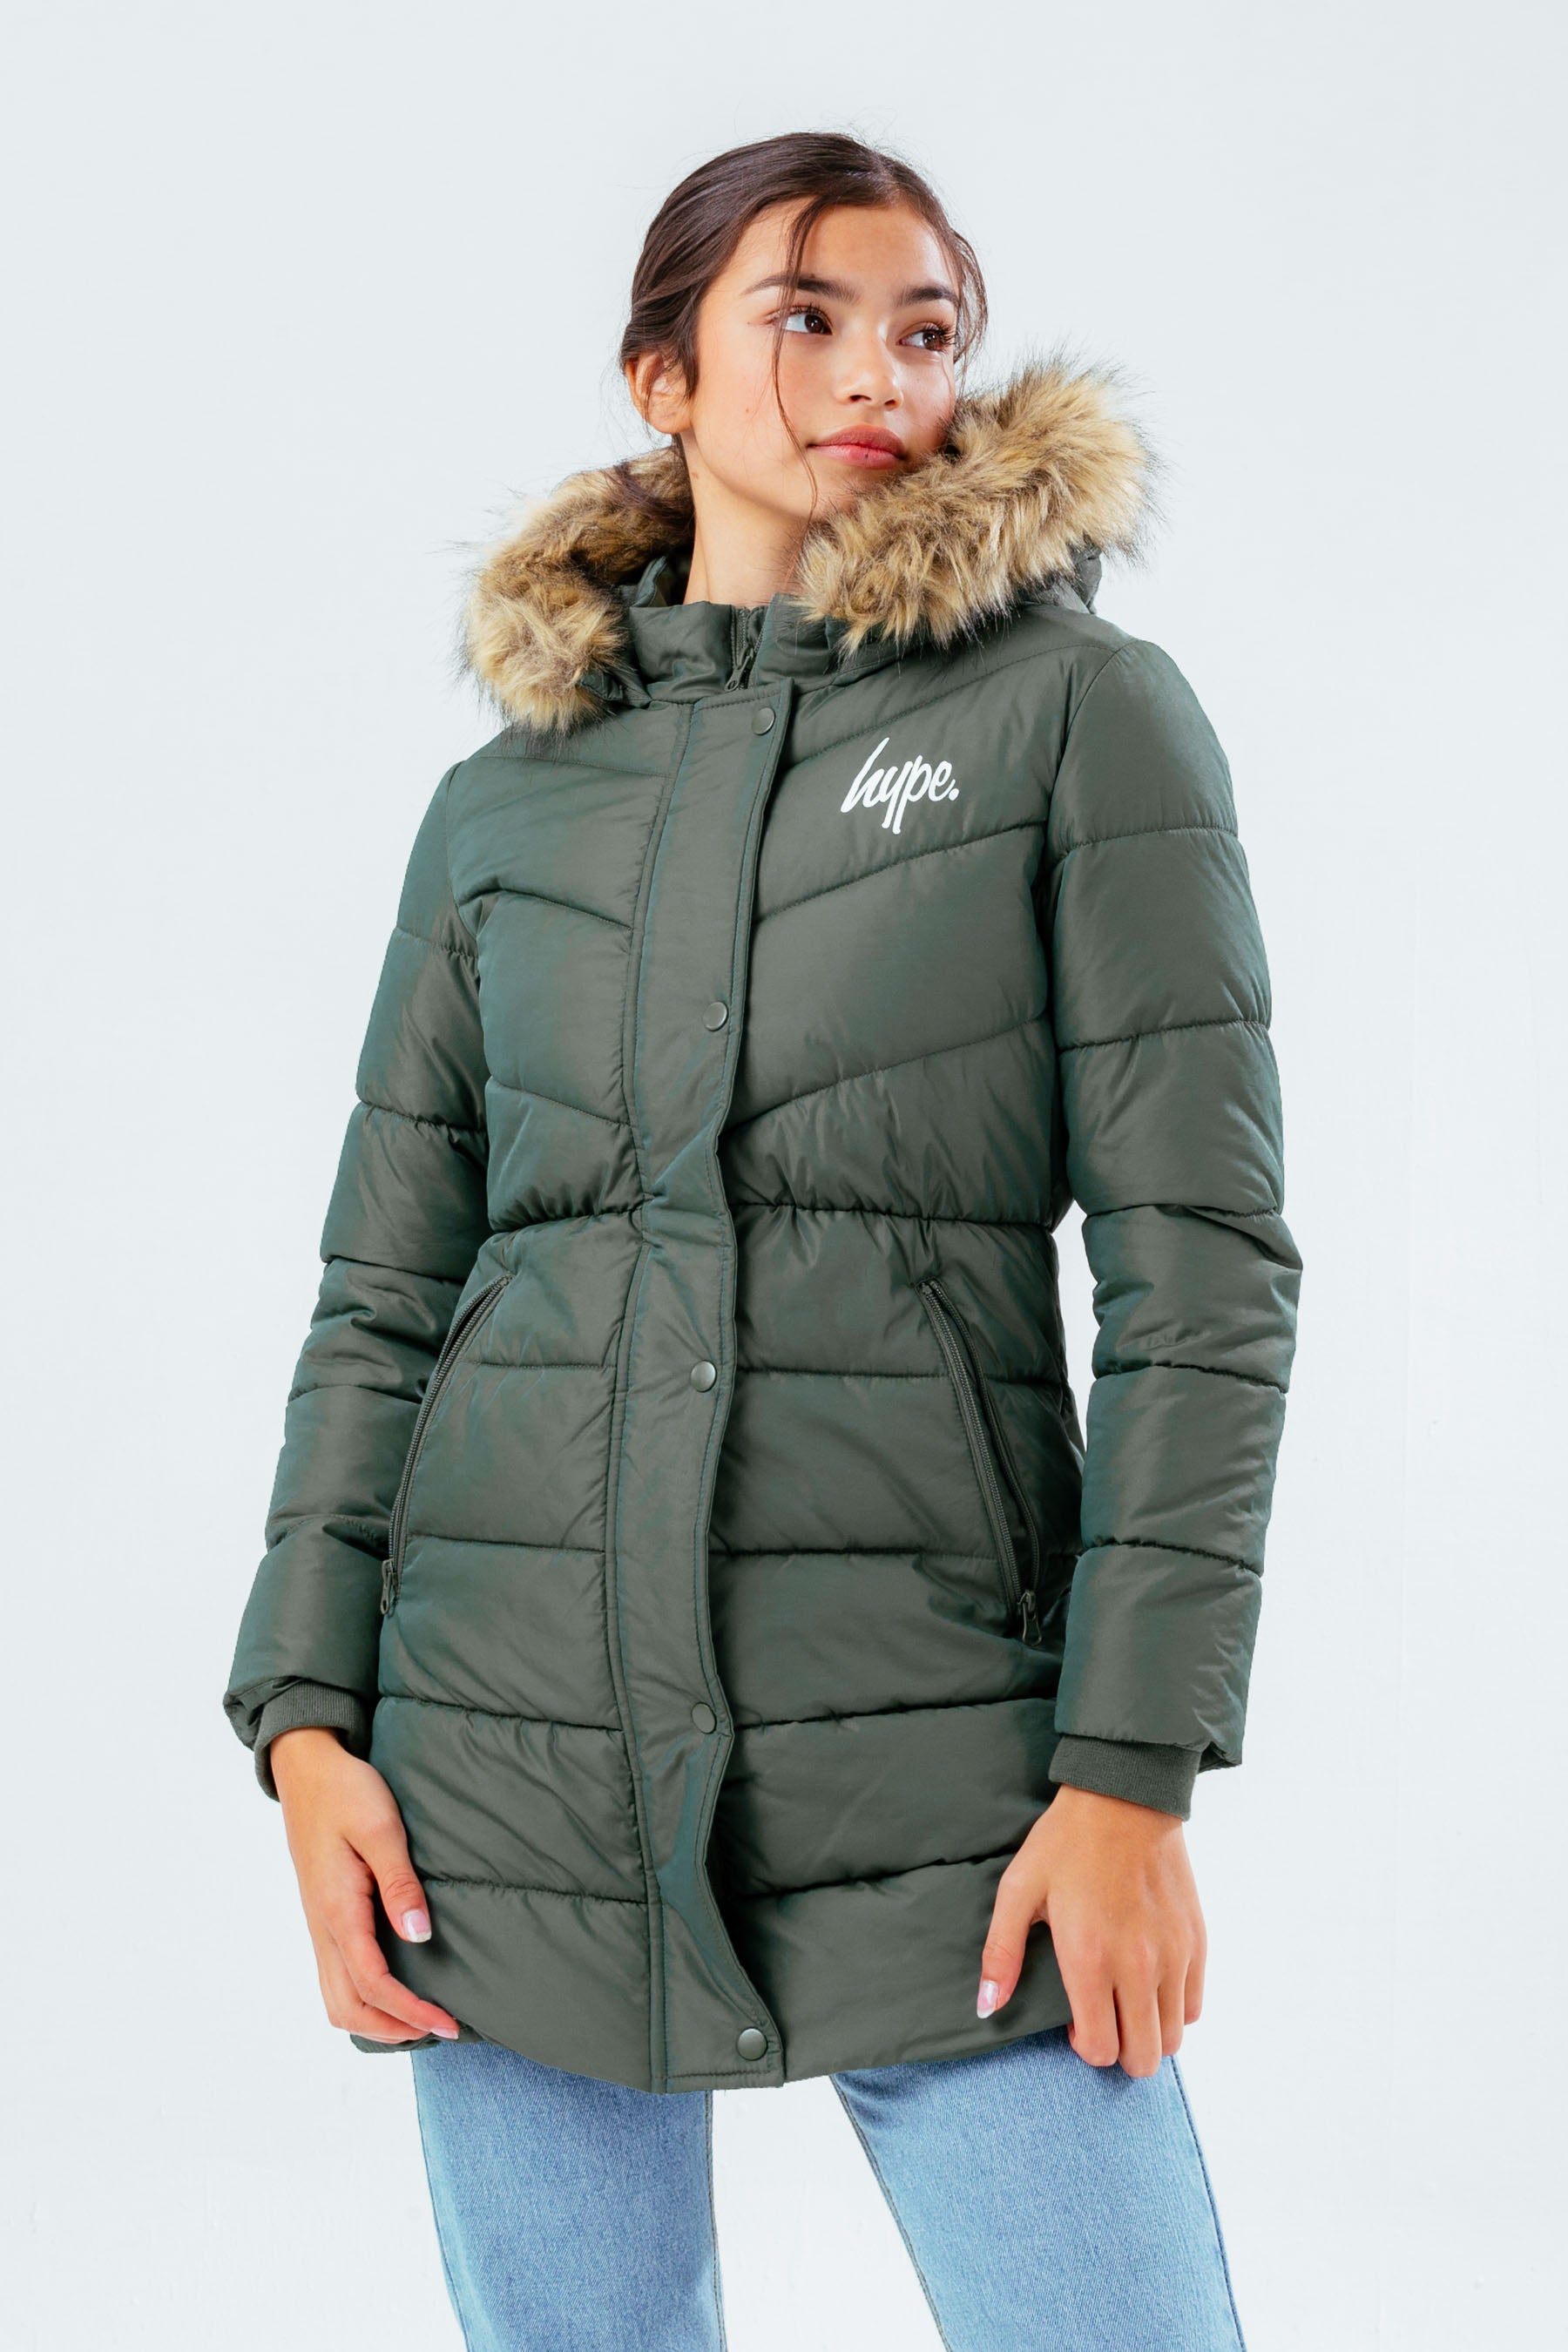 hype longline khaki girls puffer jacket with contrast fur hood